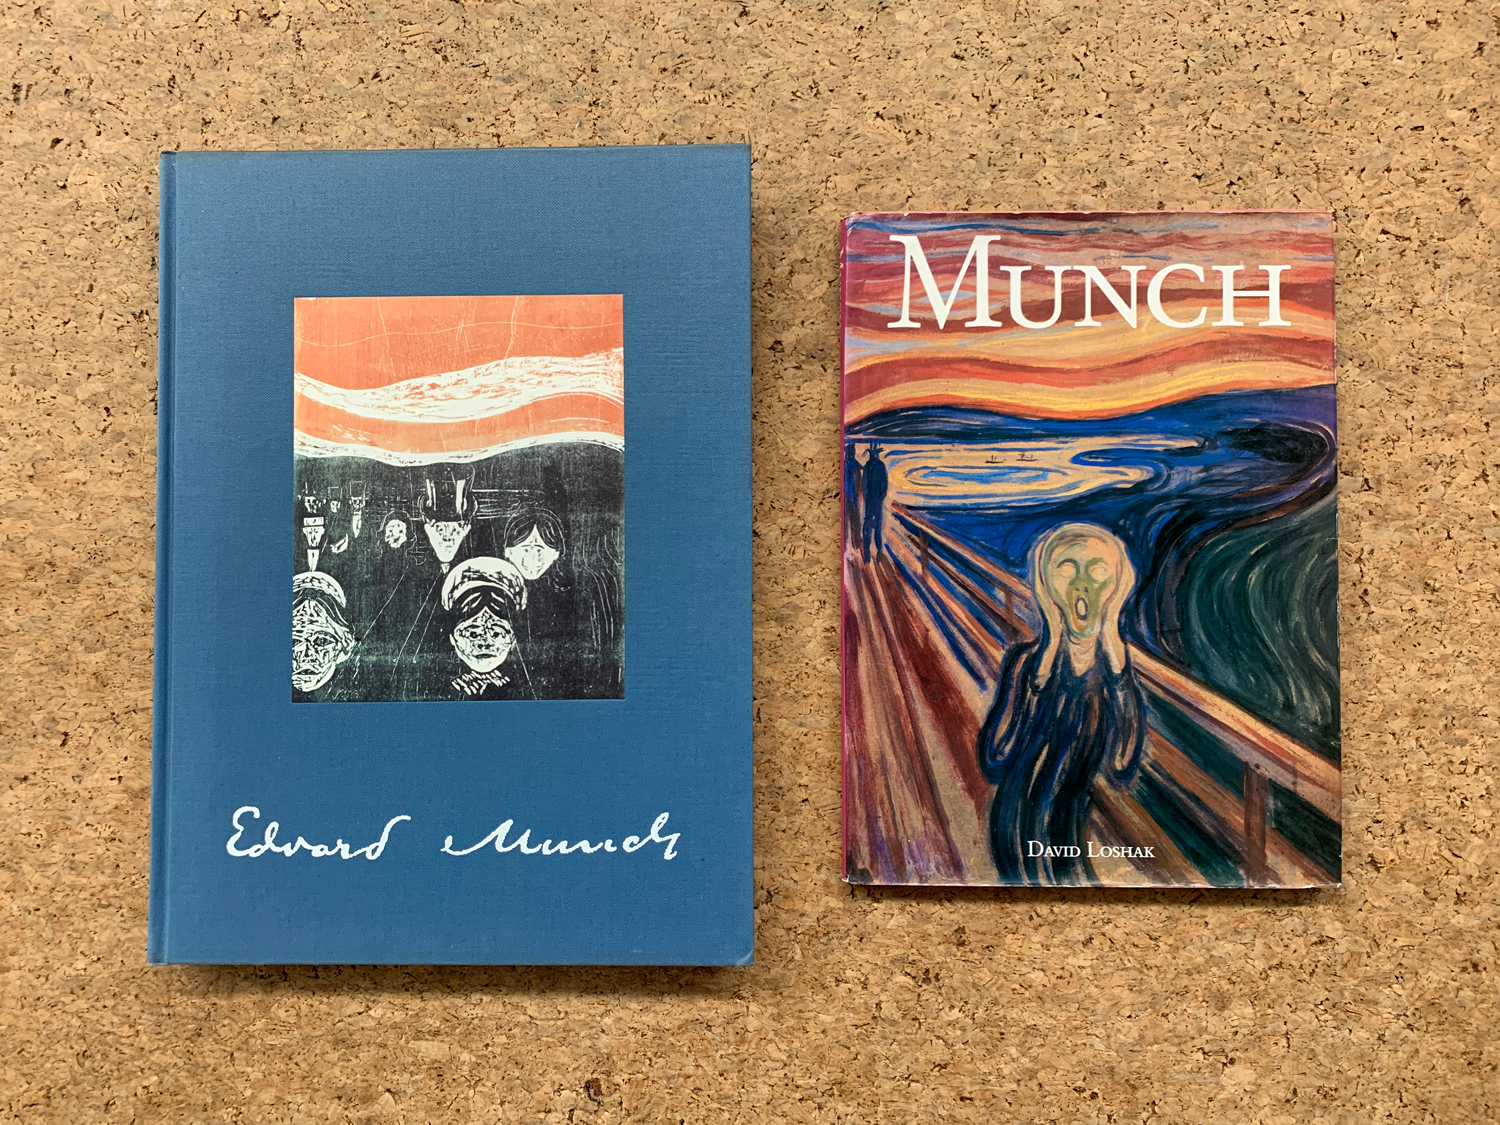 EDVARD MUNCH - Edvard Munch. Calcografie litografie silografie, 1970